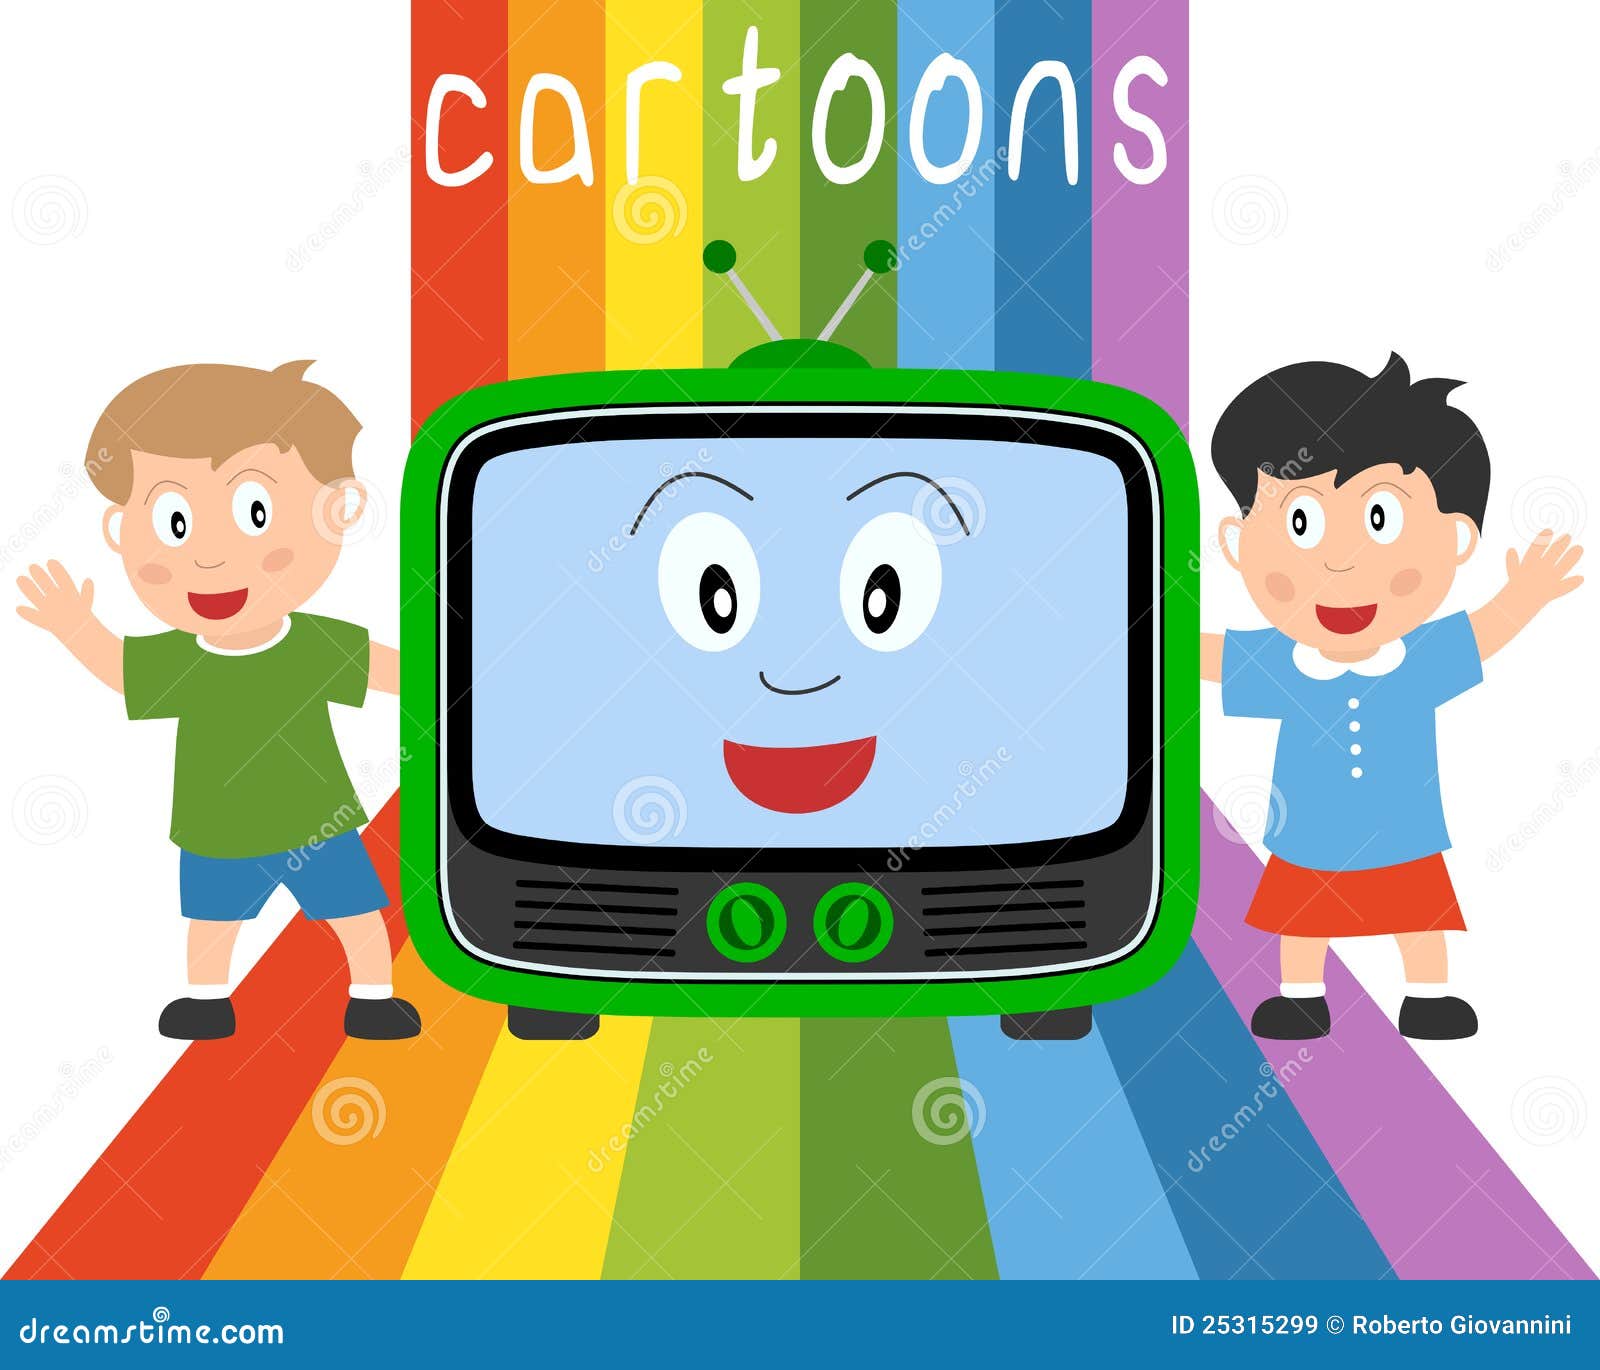 kids & television - cartoons